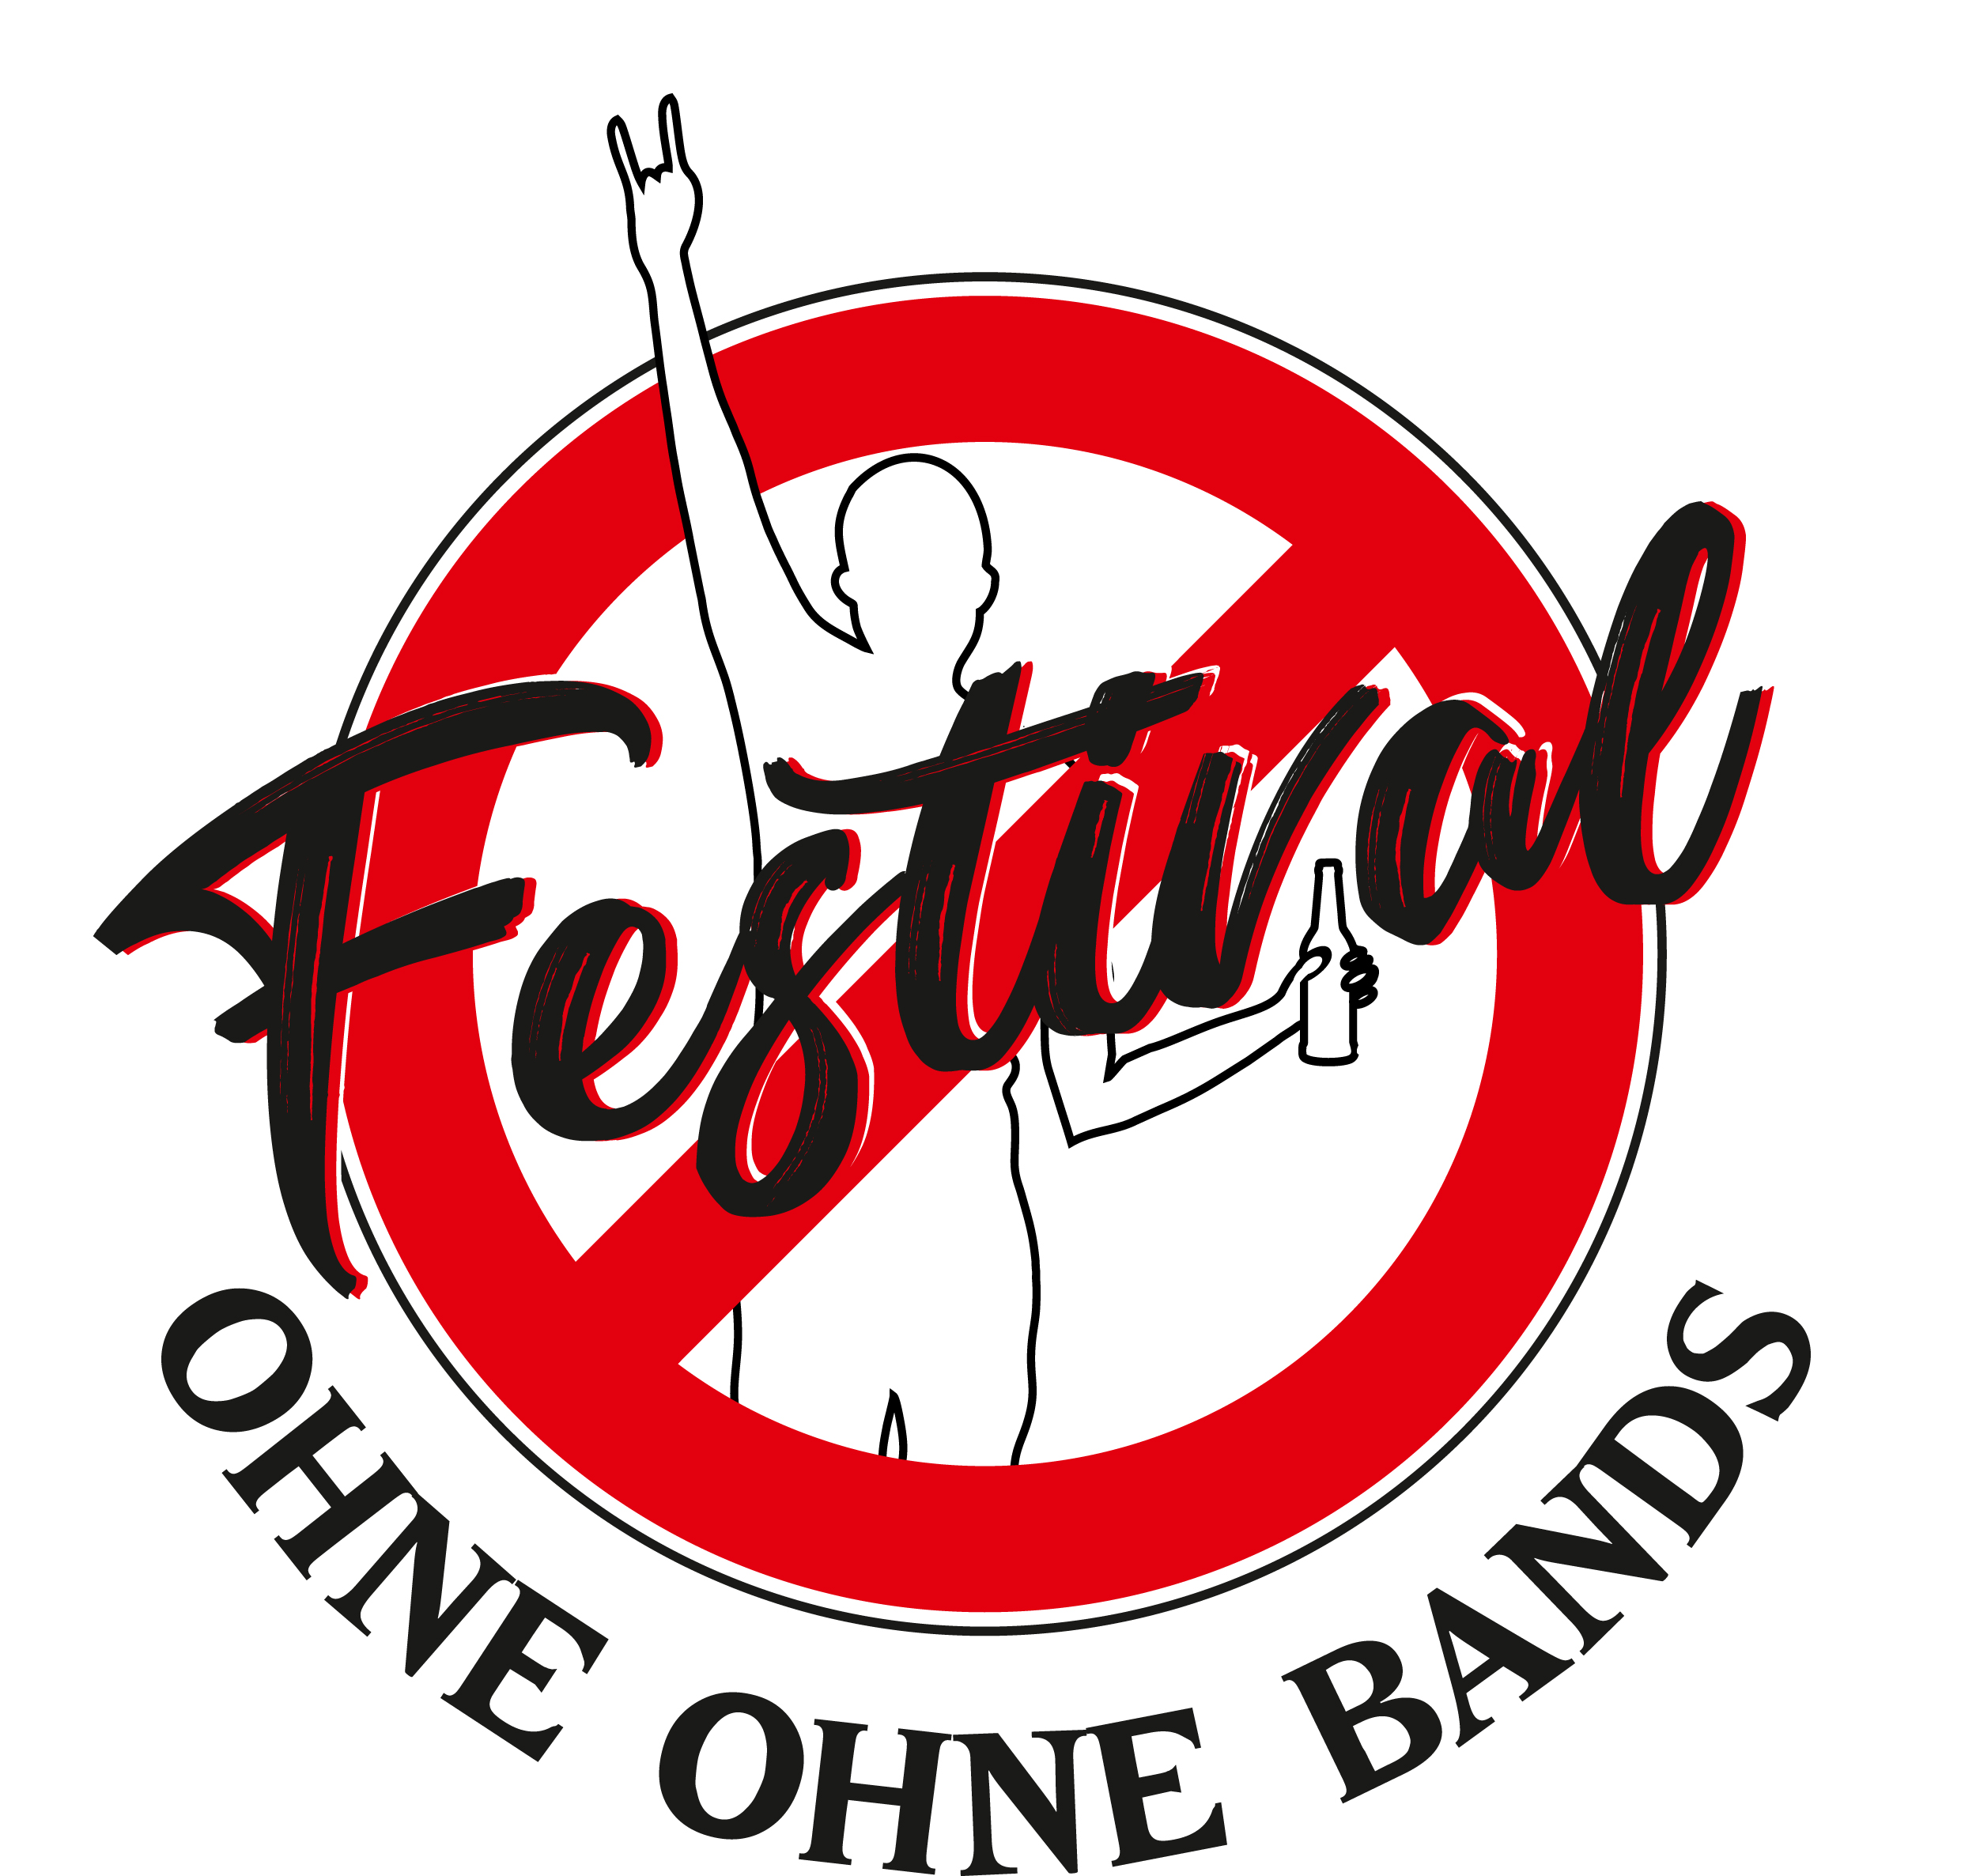 festival-ohne-bands-nun-auch-ohne-ohne-bands-mysterioese-vorkommnisse-im-umfeld-des-fob-teams